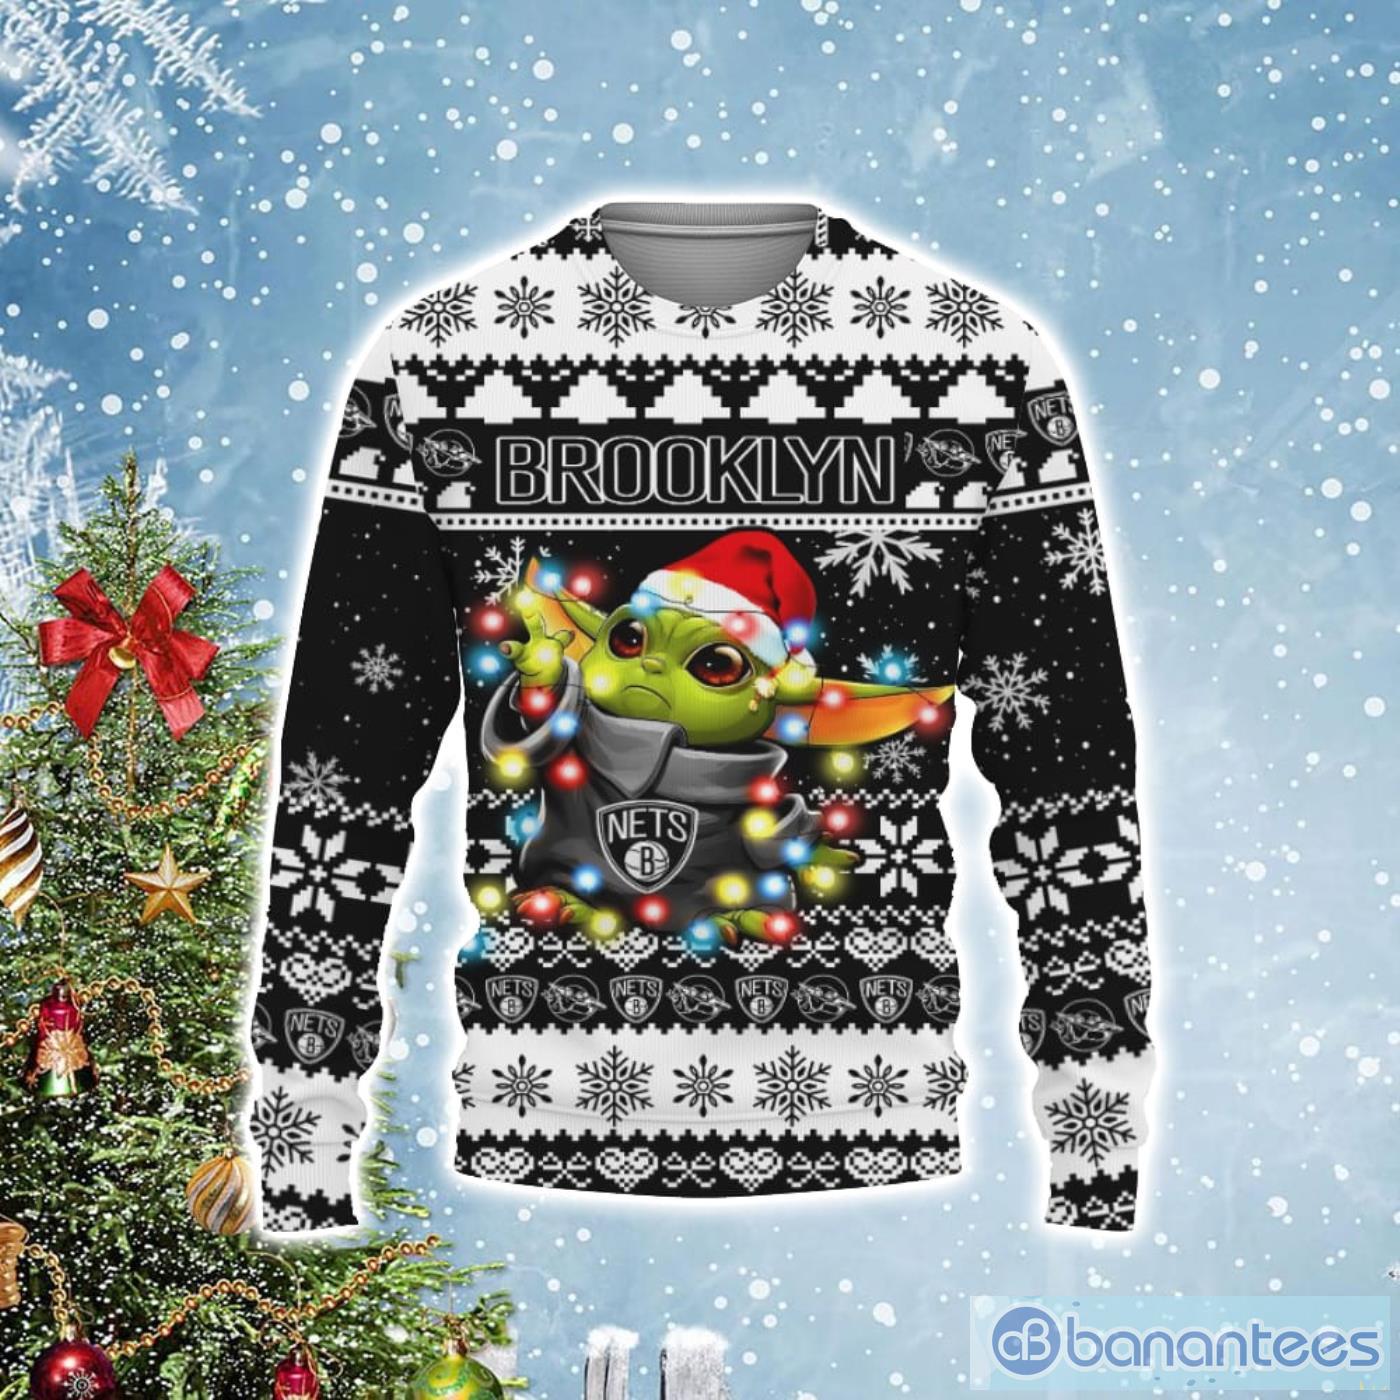 Brooklyn Nets Baby Yoda Star Wars Ugly Christmas Sweater Product Photo 1